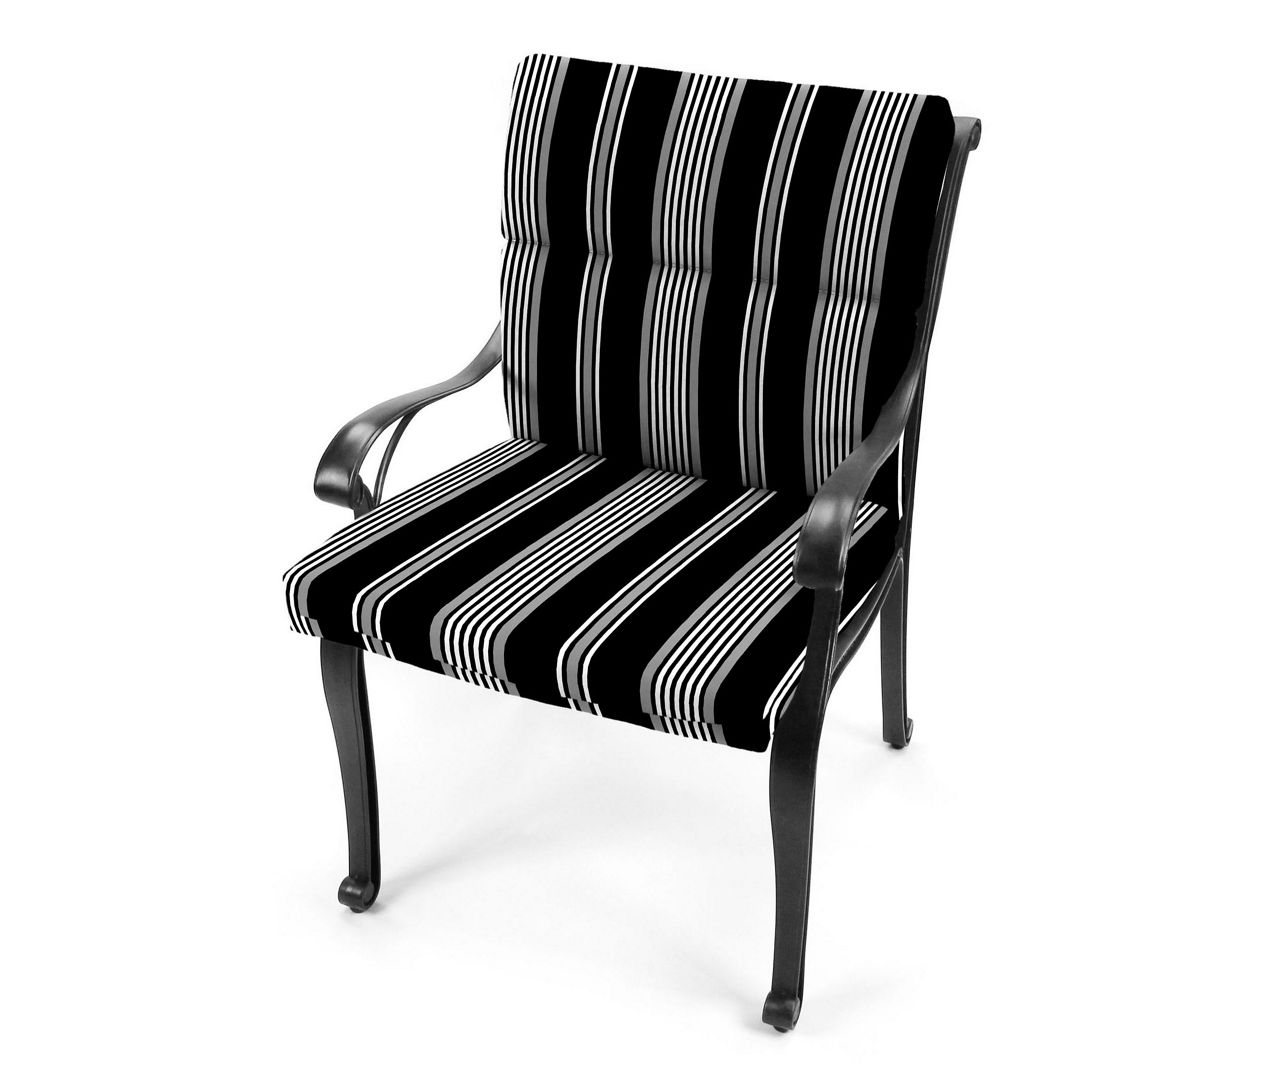 Jordan Manufacturing Reeder Stripe Outdoor Chair Cushion